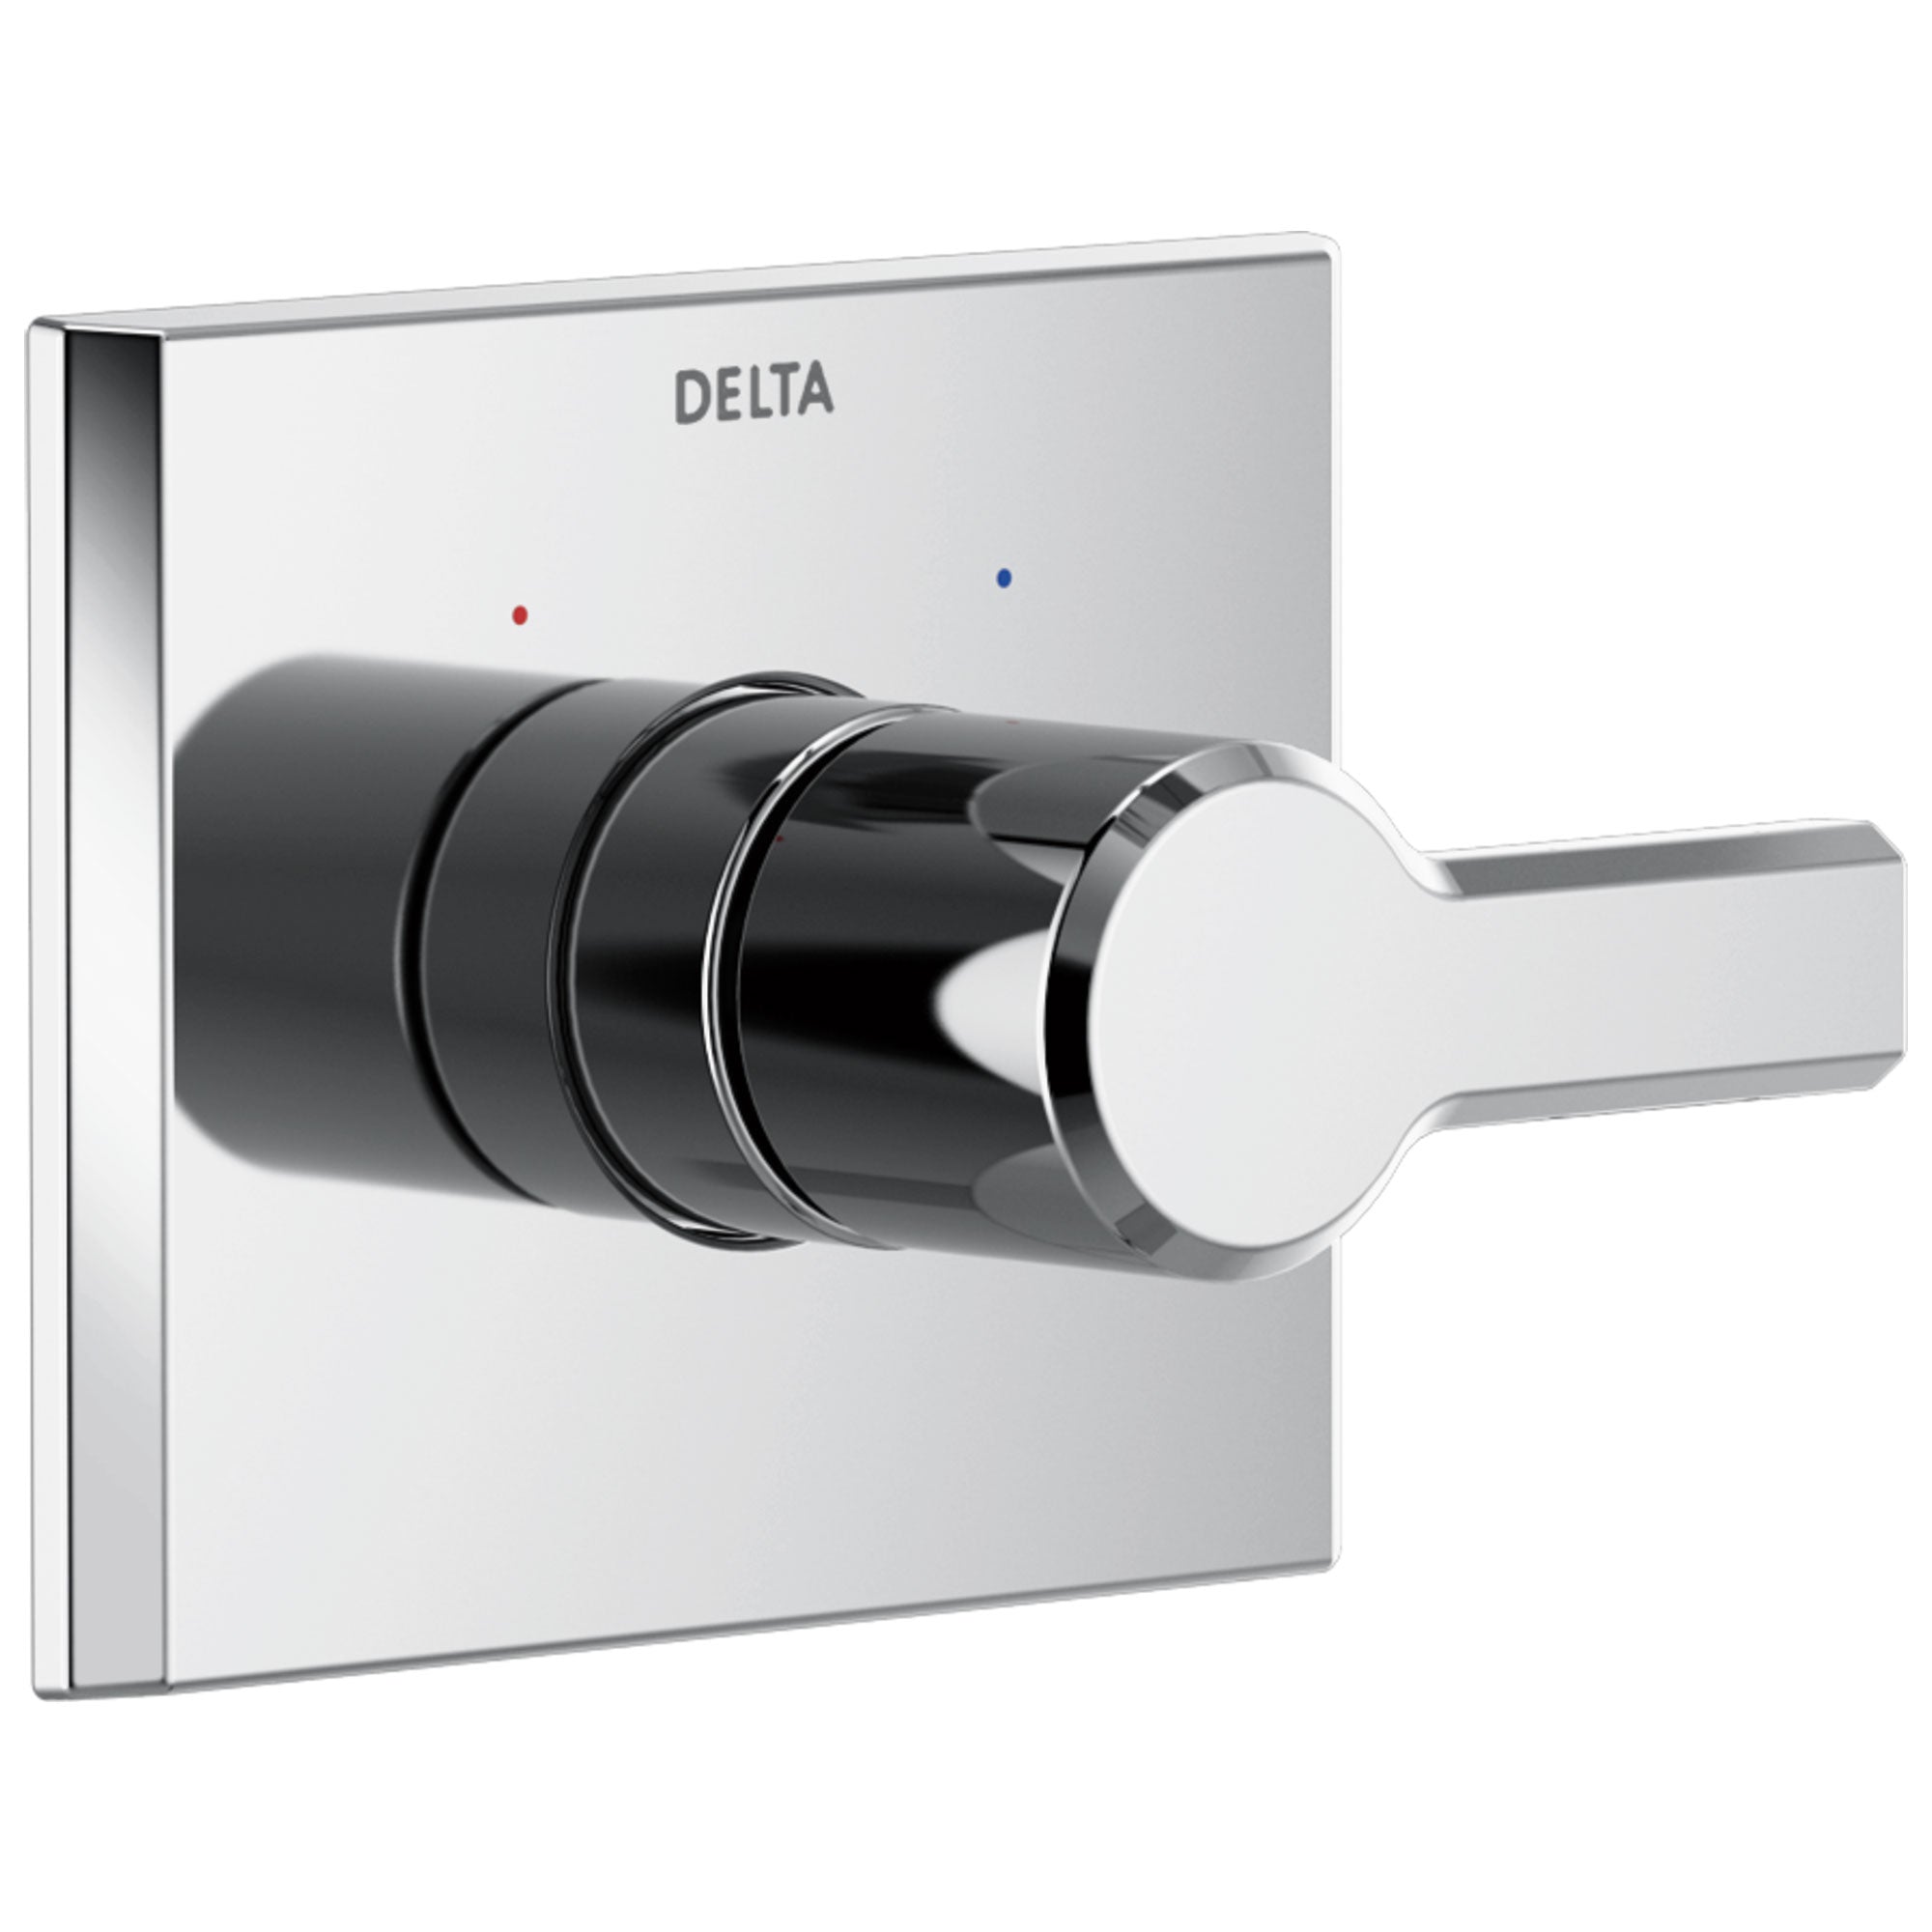 Delta Pivotal Chrome Finish Monitor 14 Series Shower Faucet Control Only Trim Kit (Requires Valve) DT14099